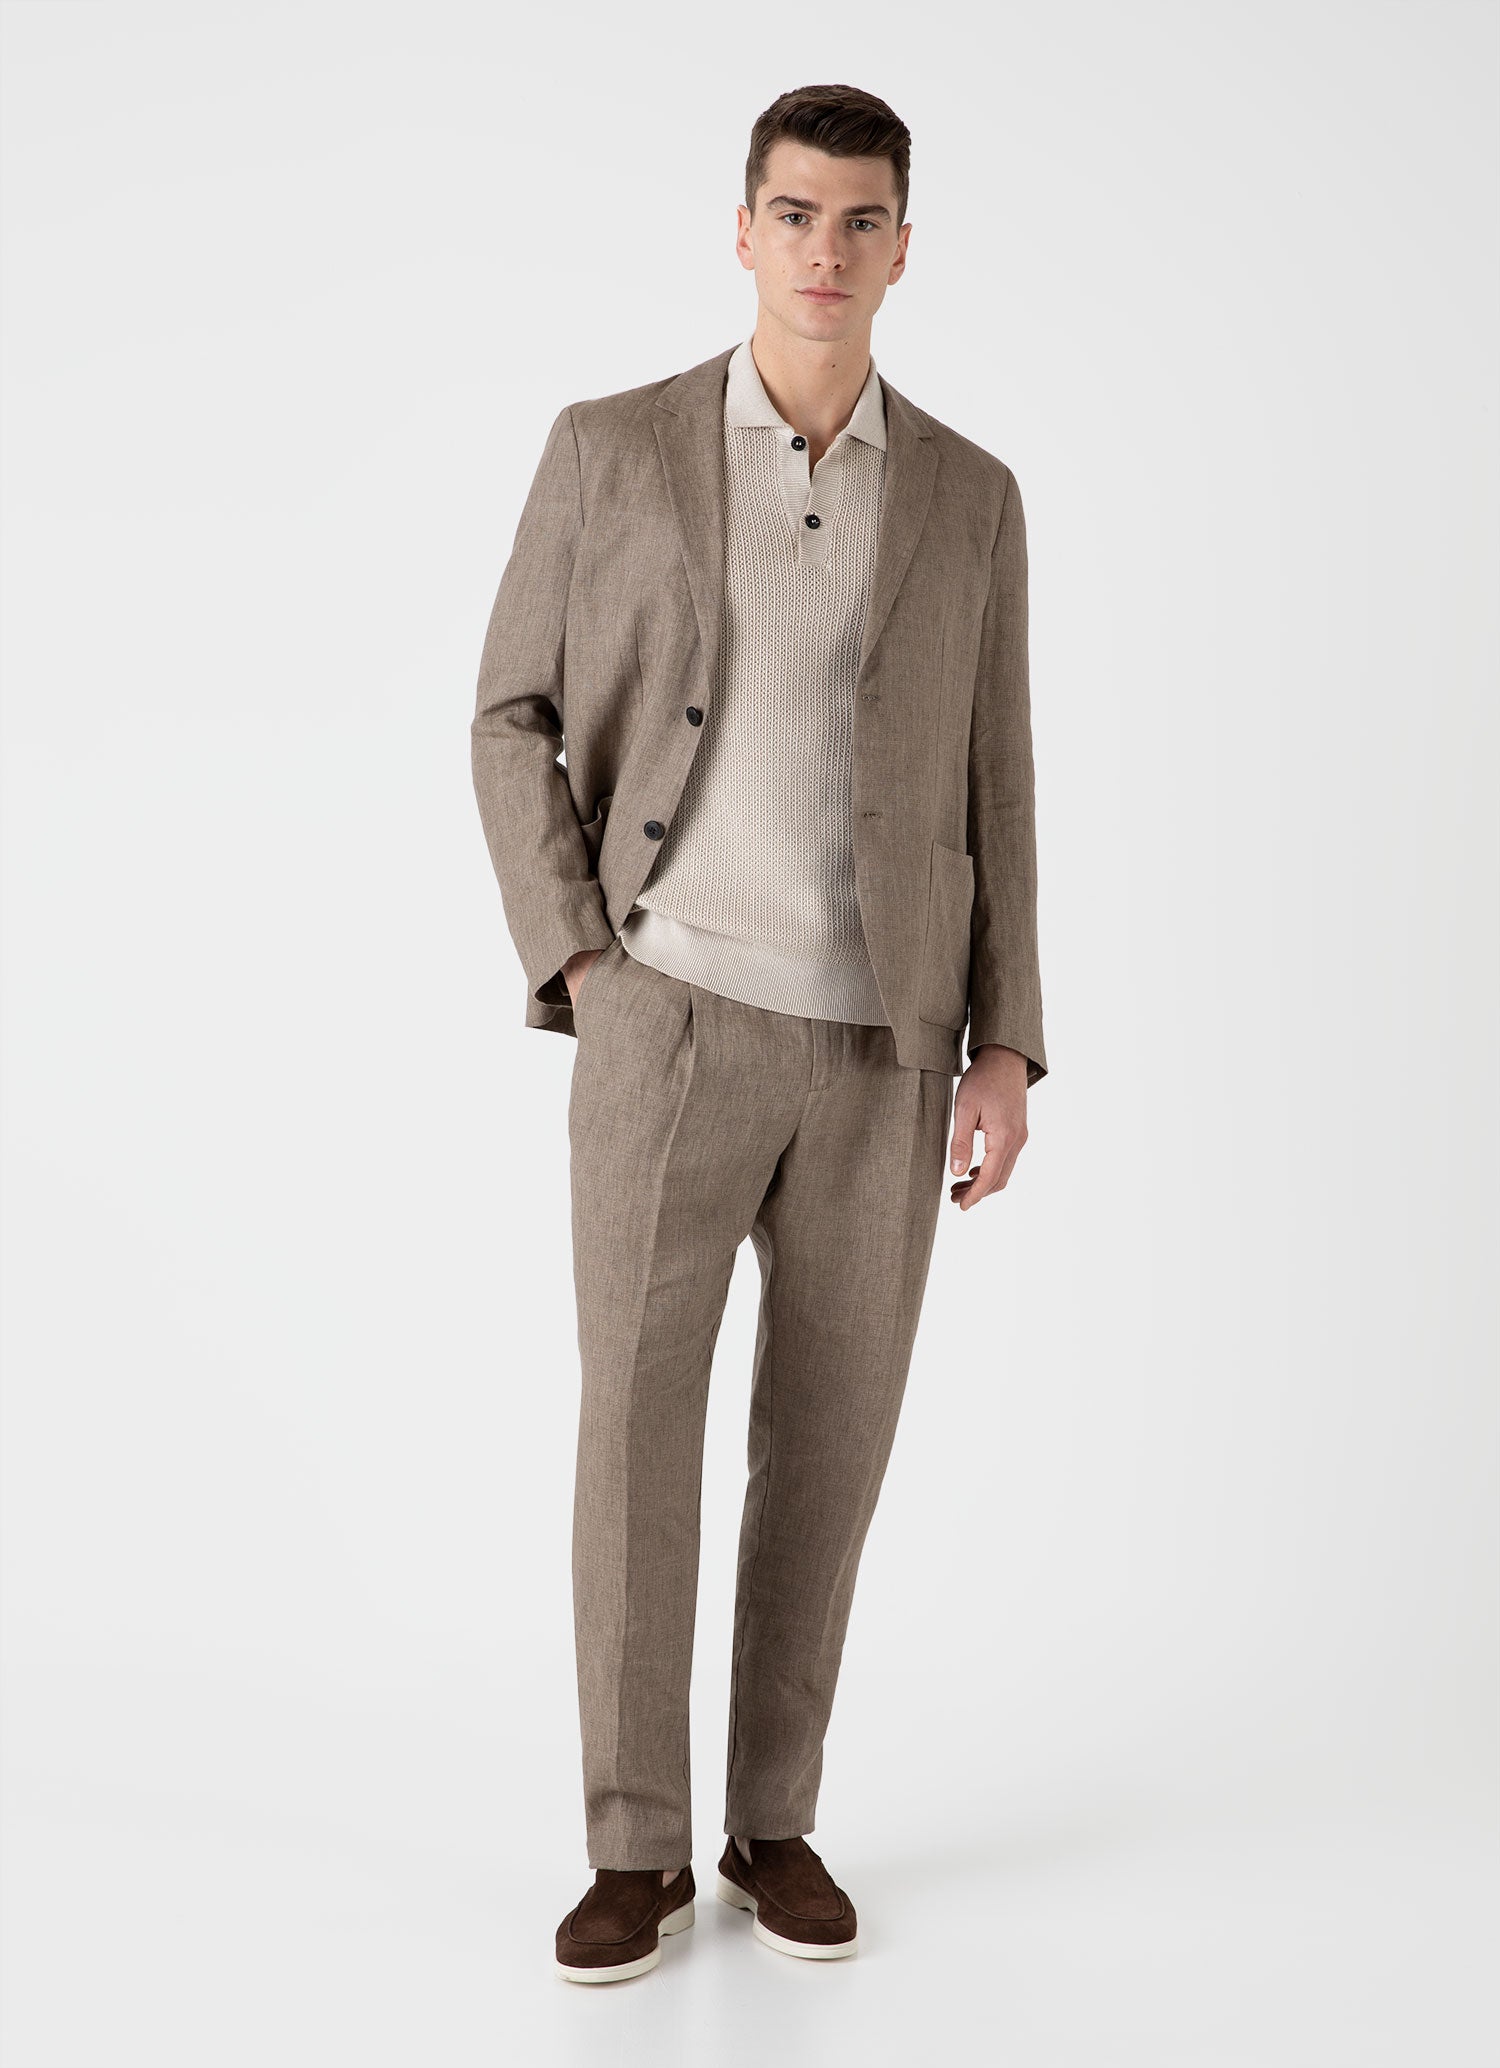 Men's Textured Knit Polo Shirt in Ecru